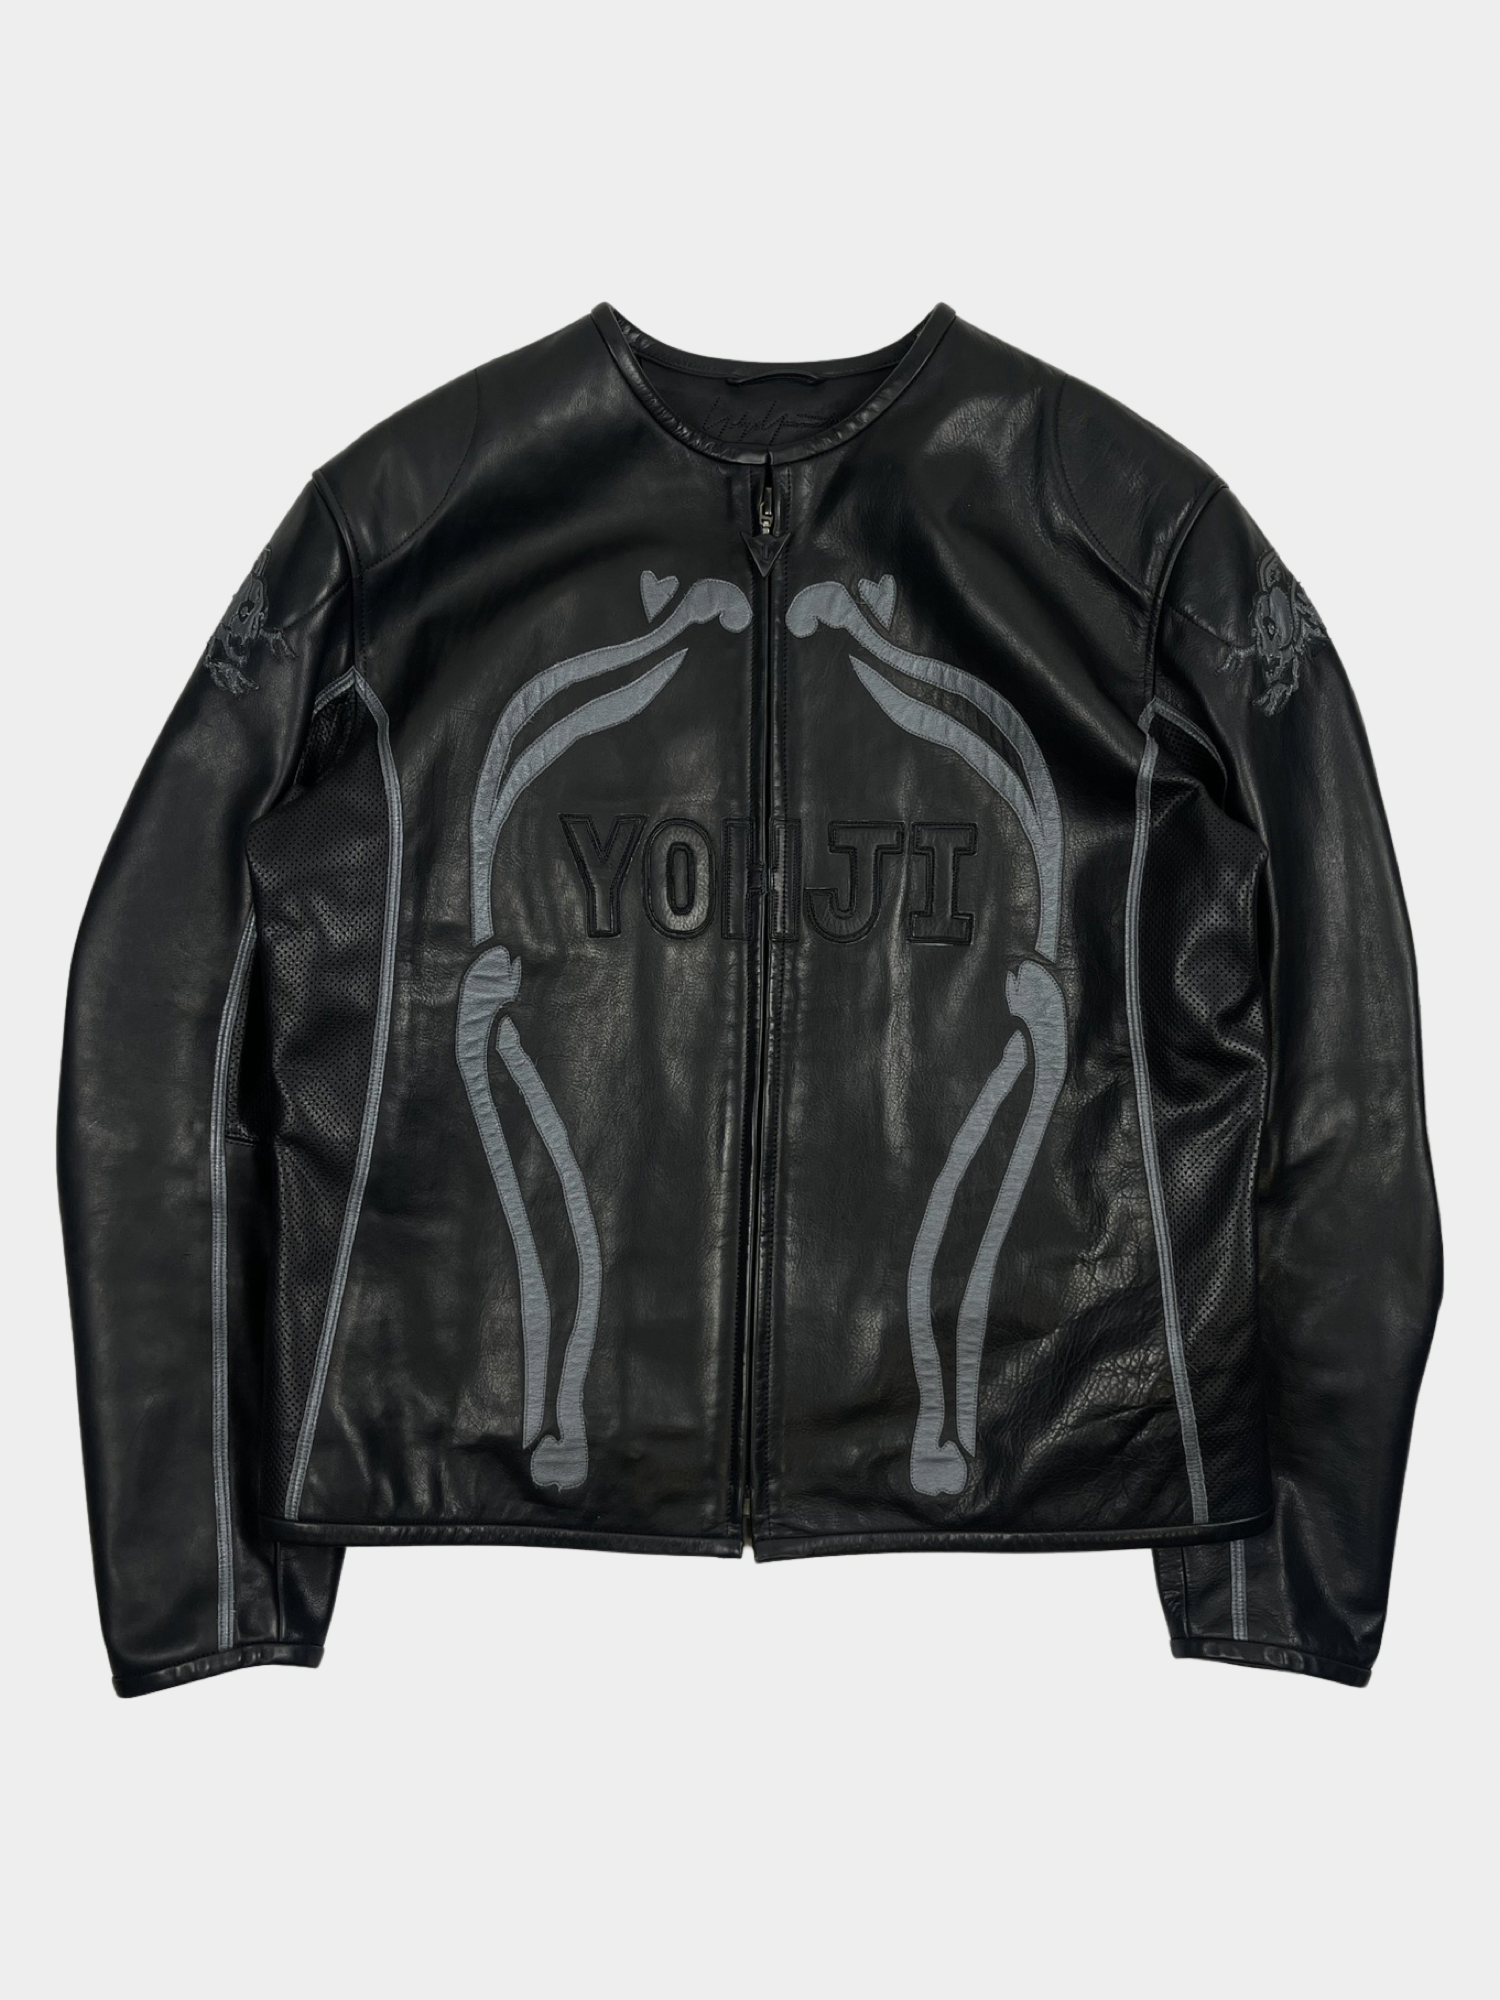 Yohji Yamamoto Pour Homme AW2004 Dainese Skull Moto Jacket - ARCHIVED